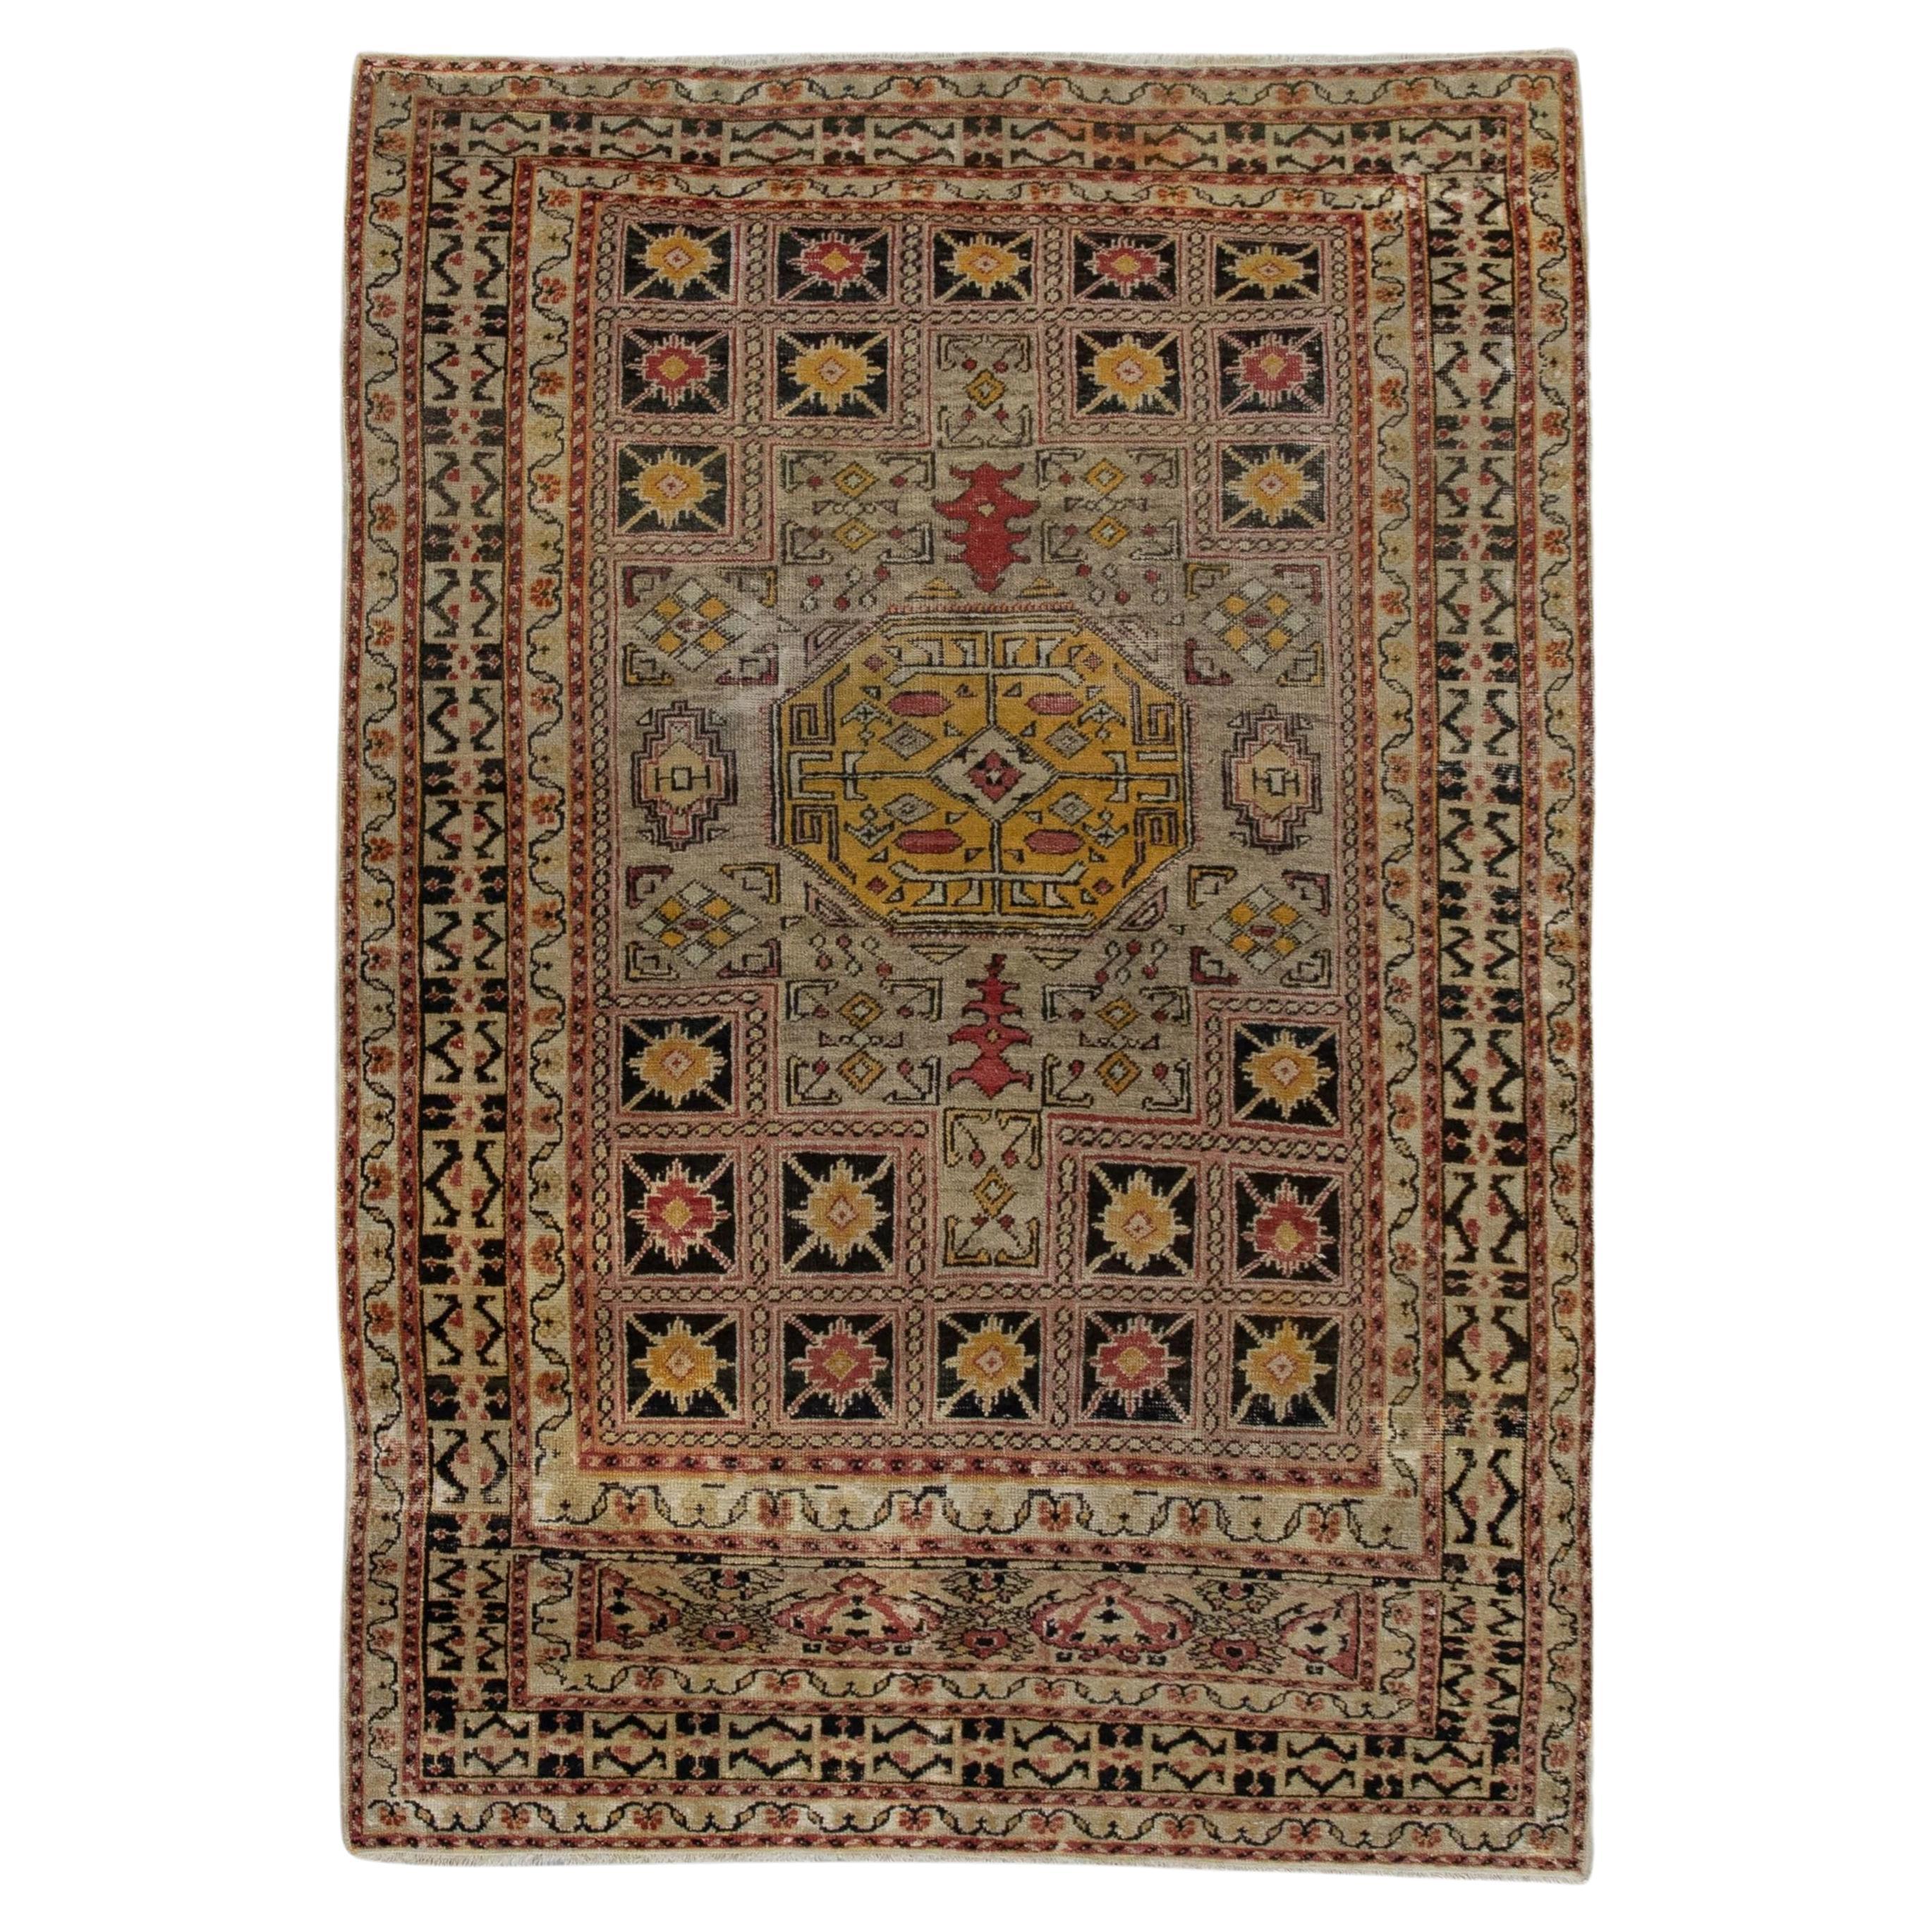 Multicolor Handwoven Wool Vintage Turkish Oushak Rug 4'6" x 6'4"